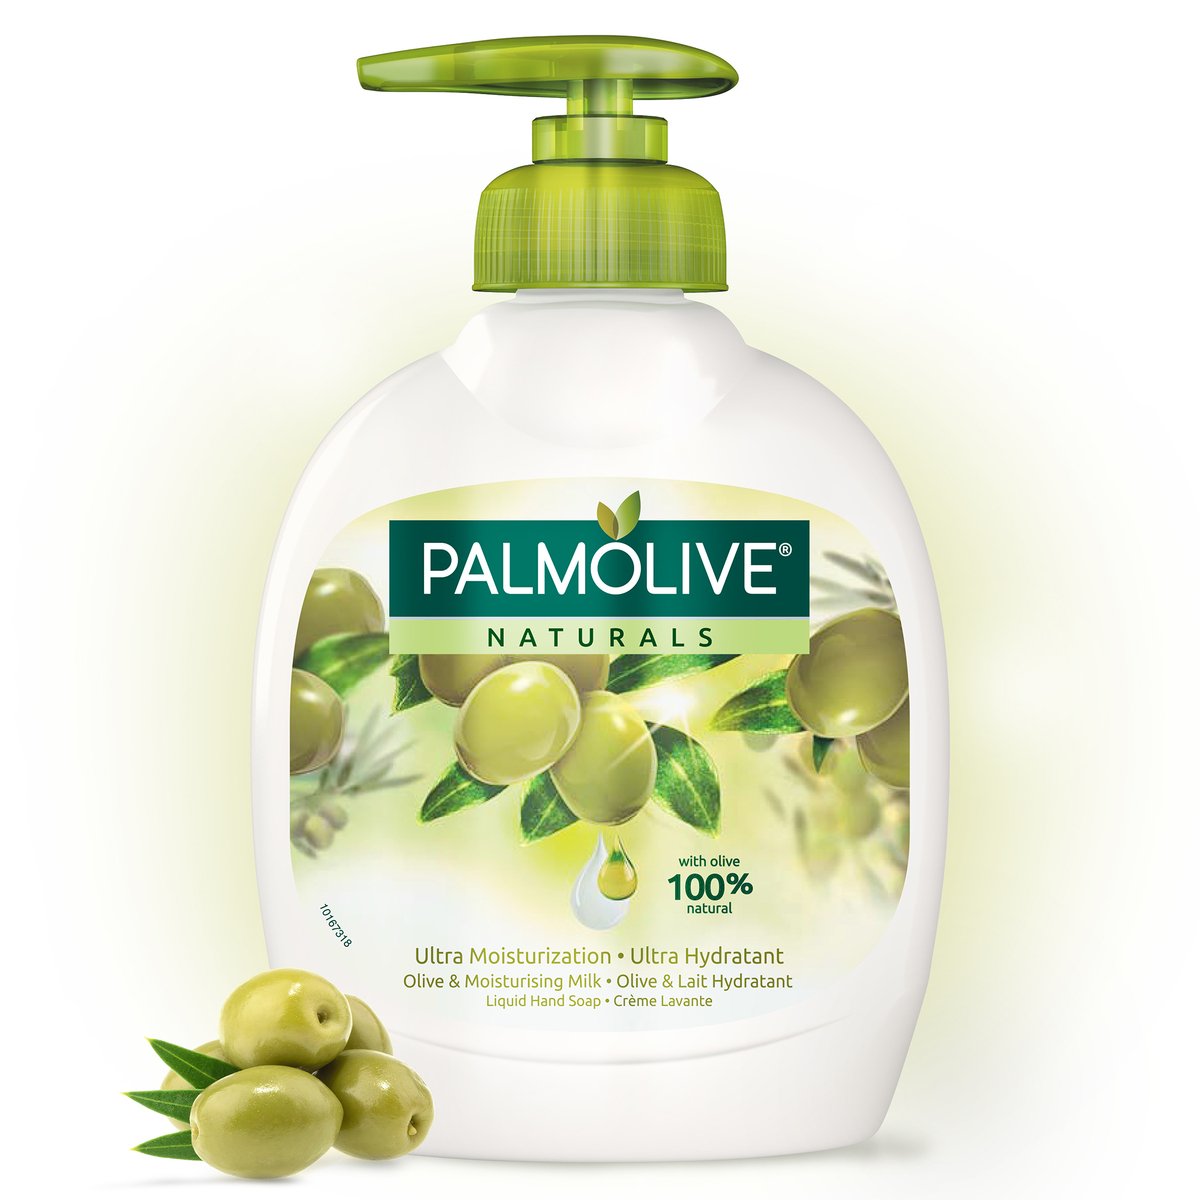 Palmolive Naturals Liquid Hand Soap Olive And Moisturizing Milk 300ml